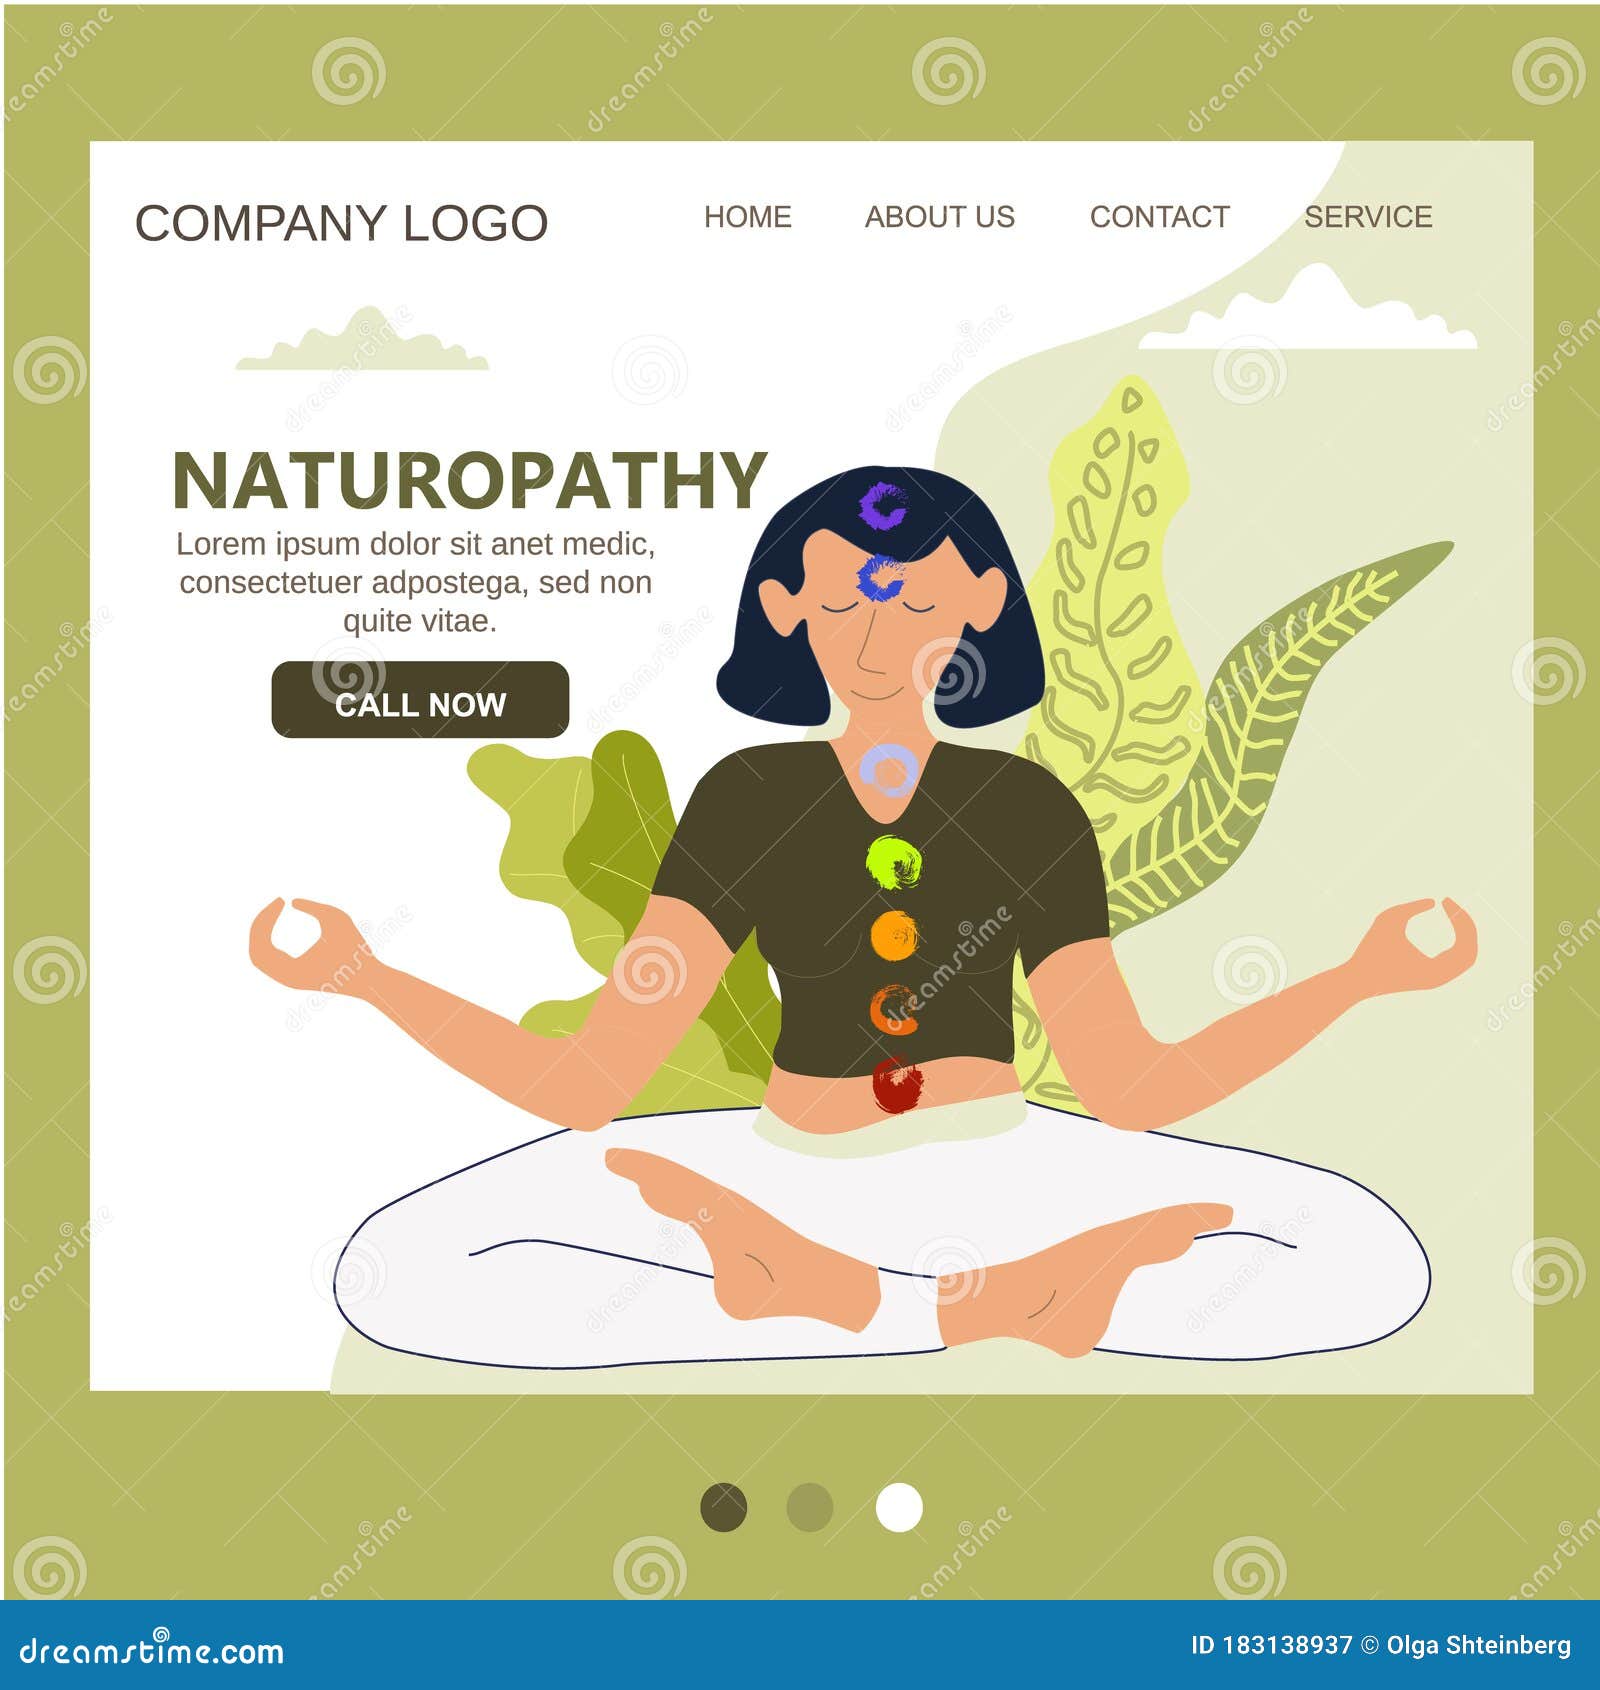 Ayurveda and Yoga Website Template, Herbal Alternative Medicine